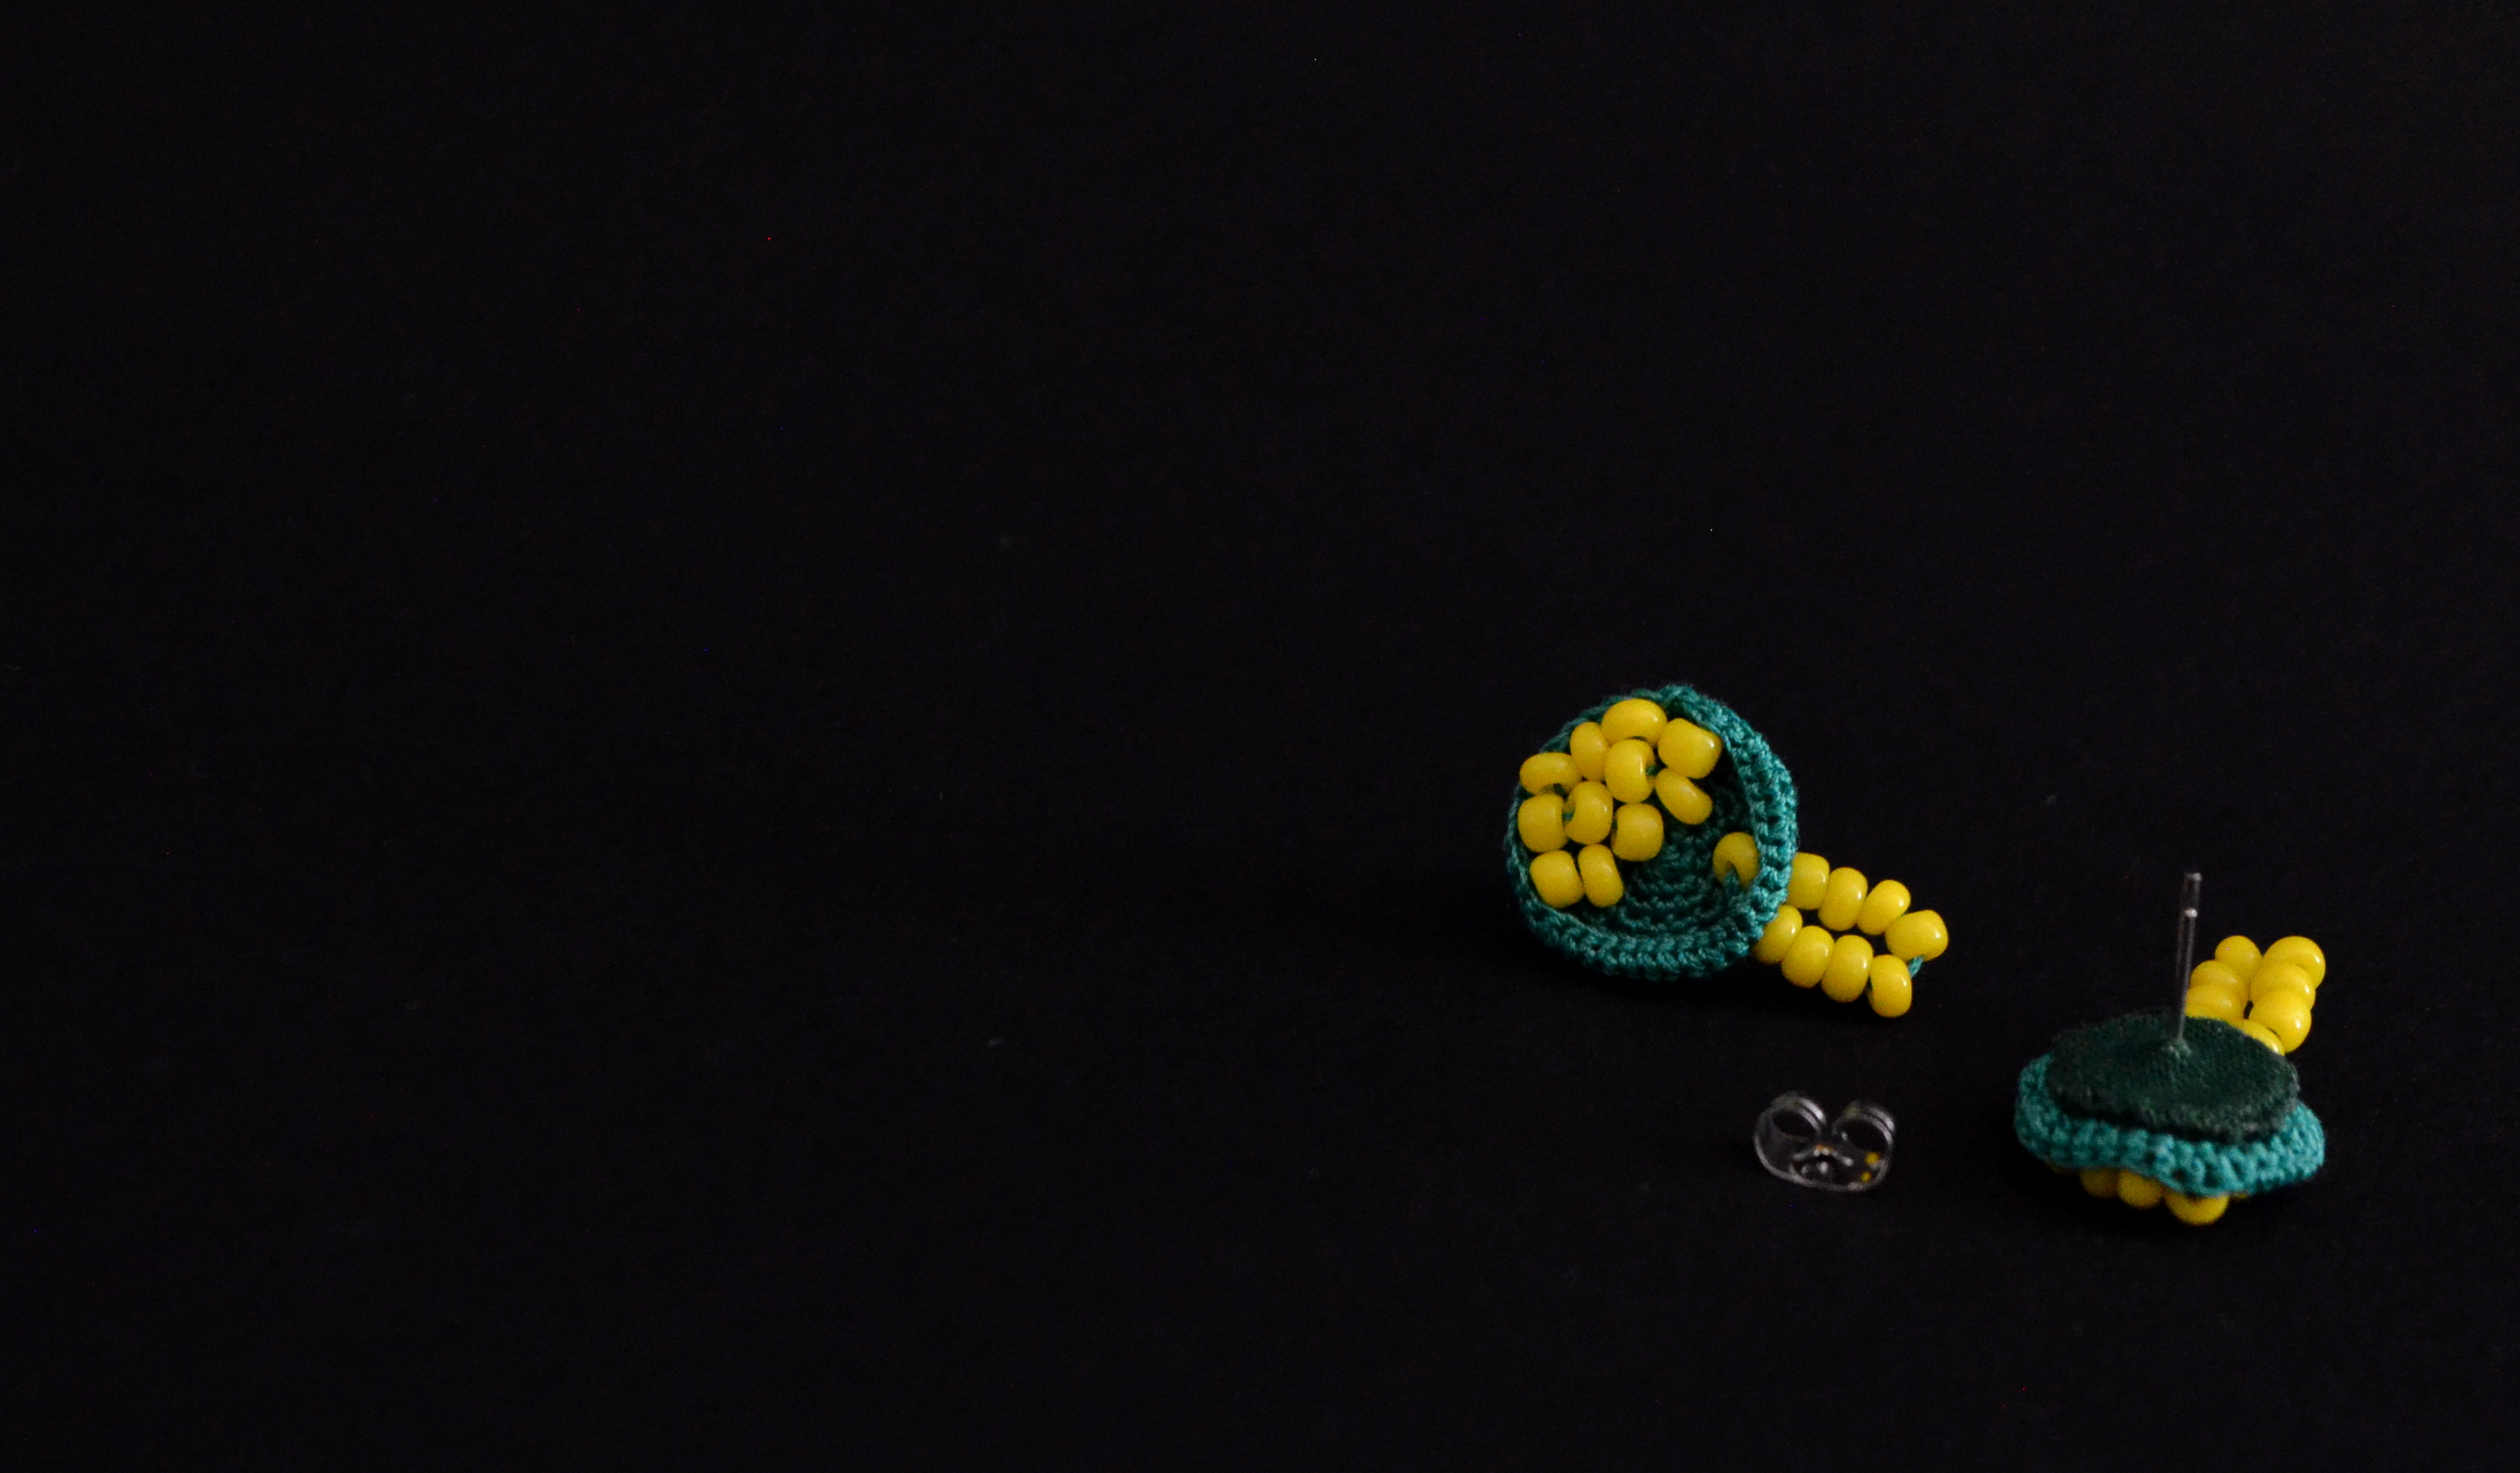 Crochet earrings - Lime